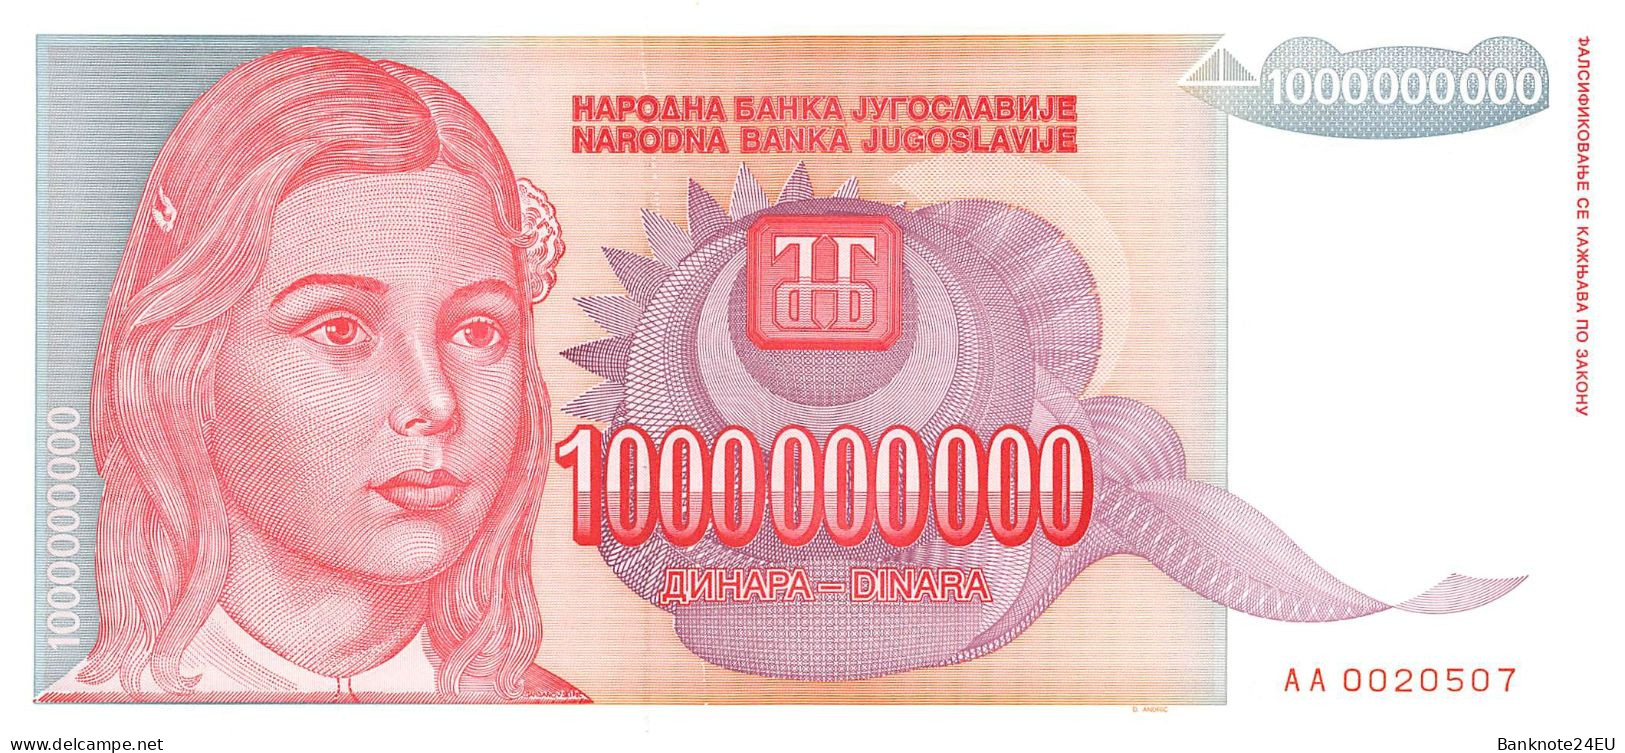 Yugoslavia 1 Billion Dinara 1993 Unc Pn 126a - Yugoslavia